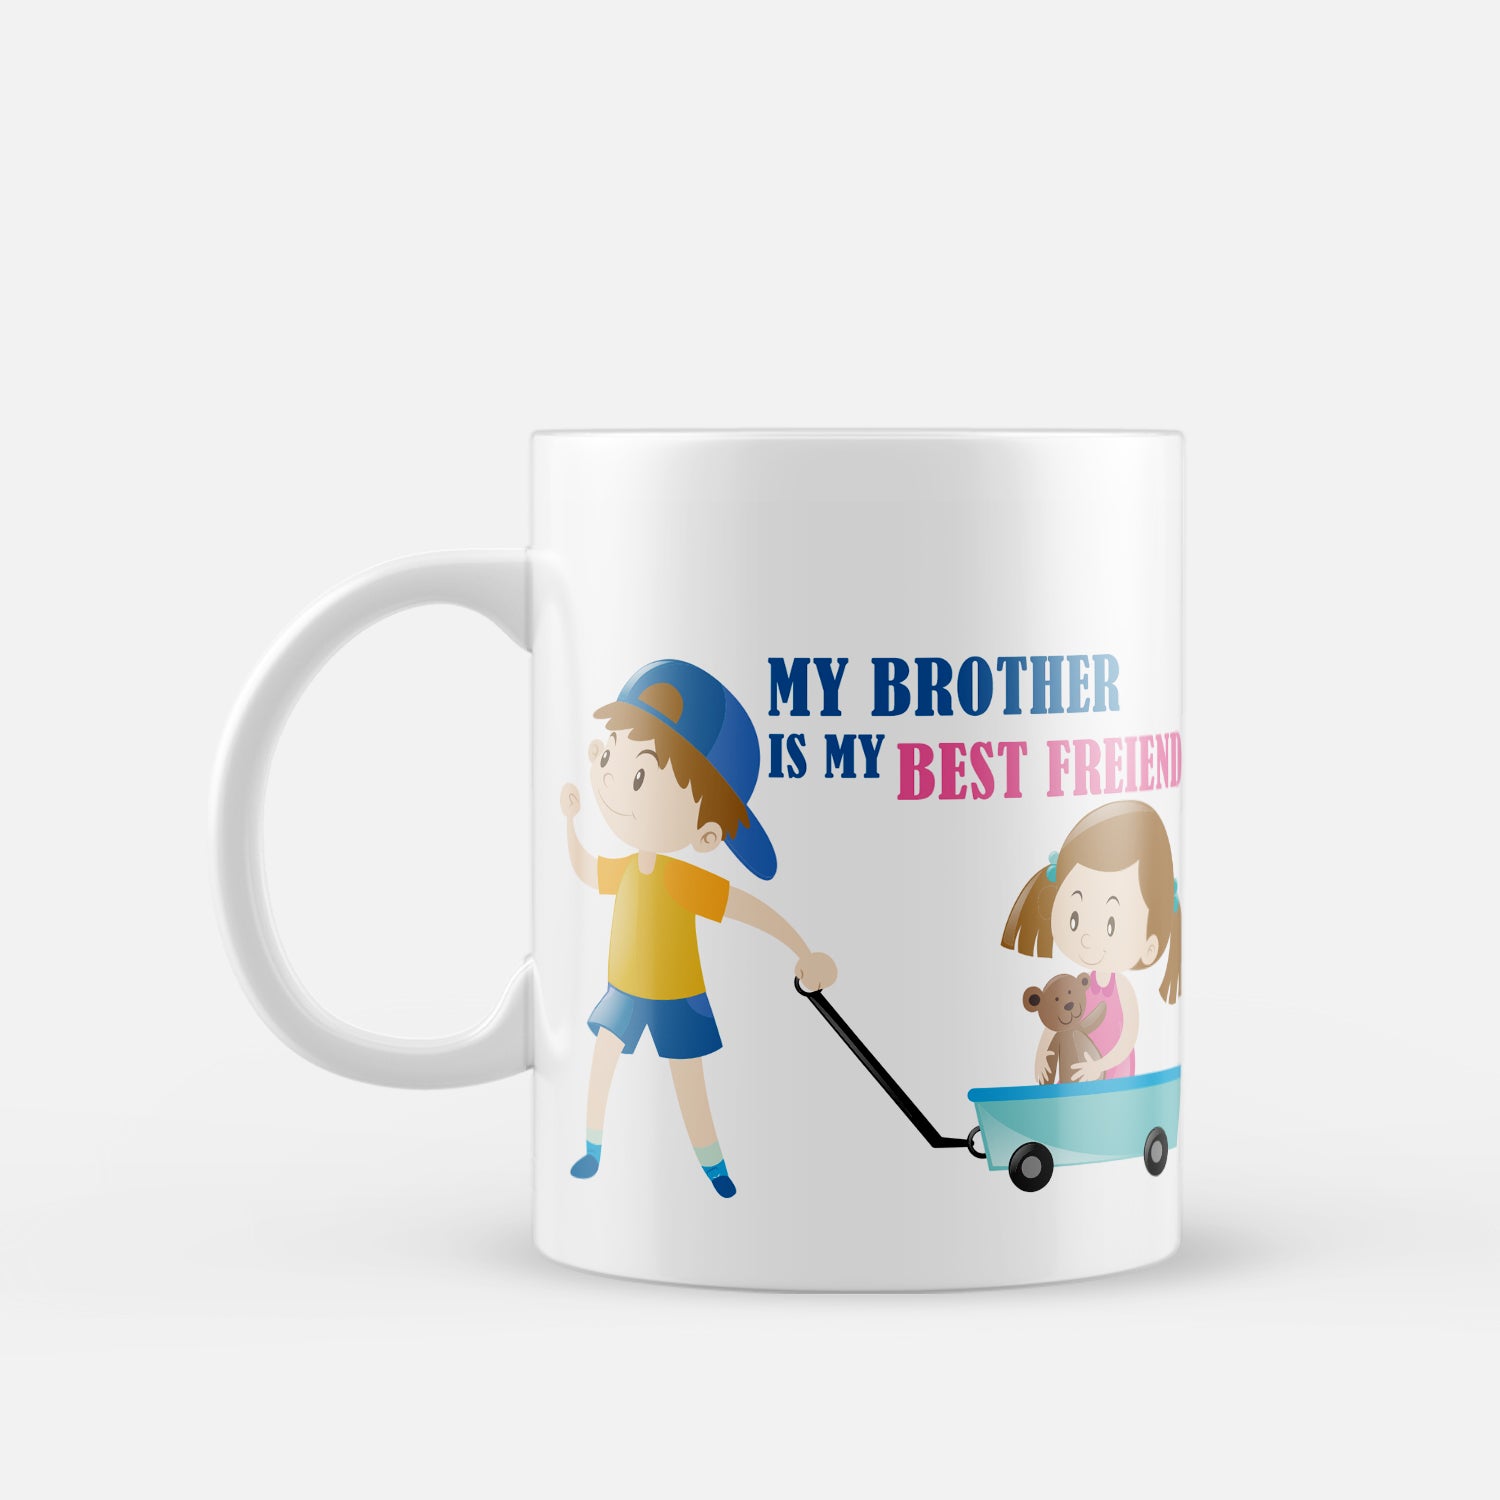 "My brother is my best friend" Brother Ceramic Coffee/Tea Mug 2